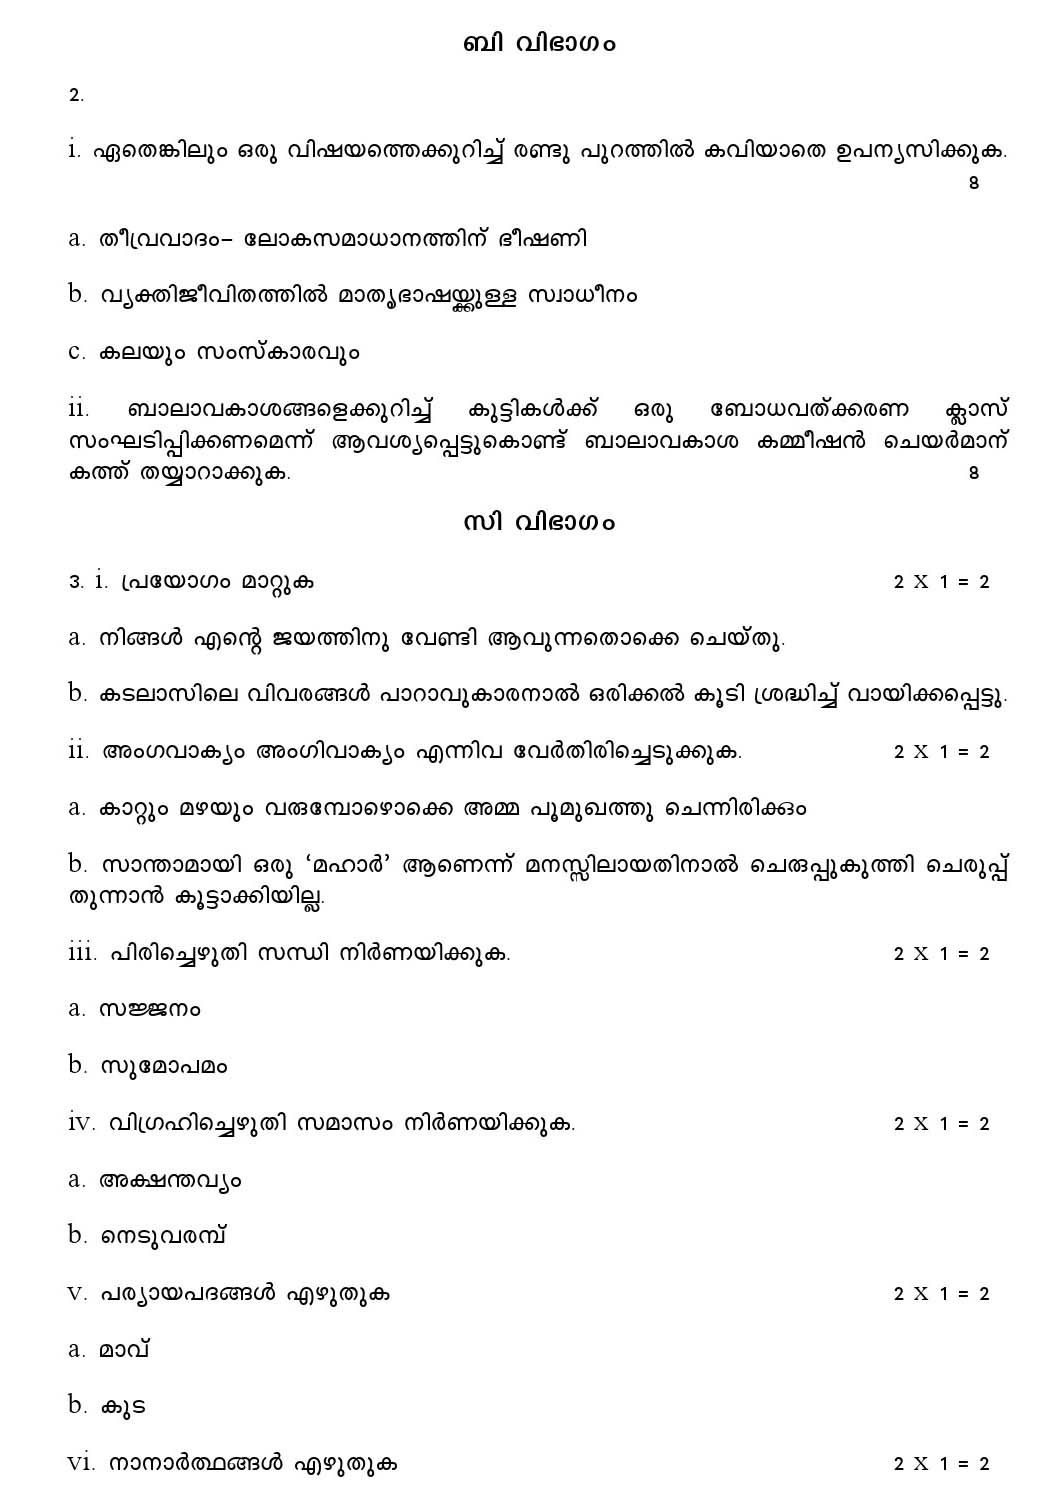 Malayalam CBSE Class X Sample Question Paper 2018-19 - Image 2